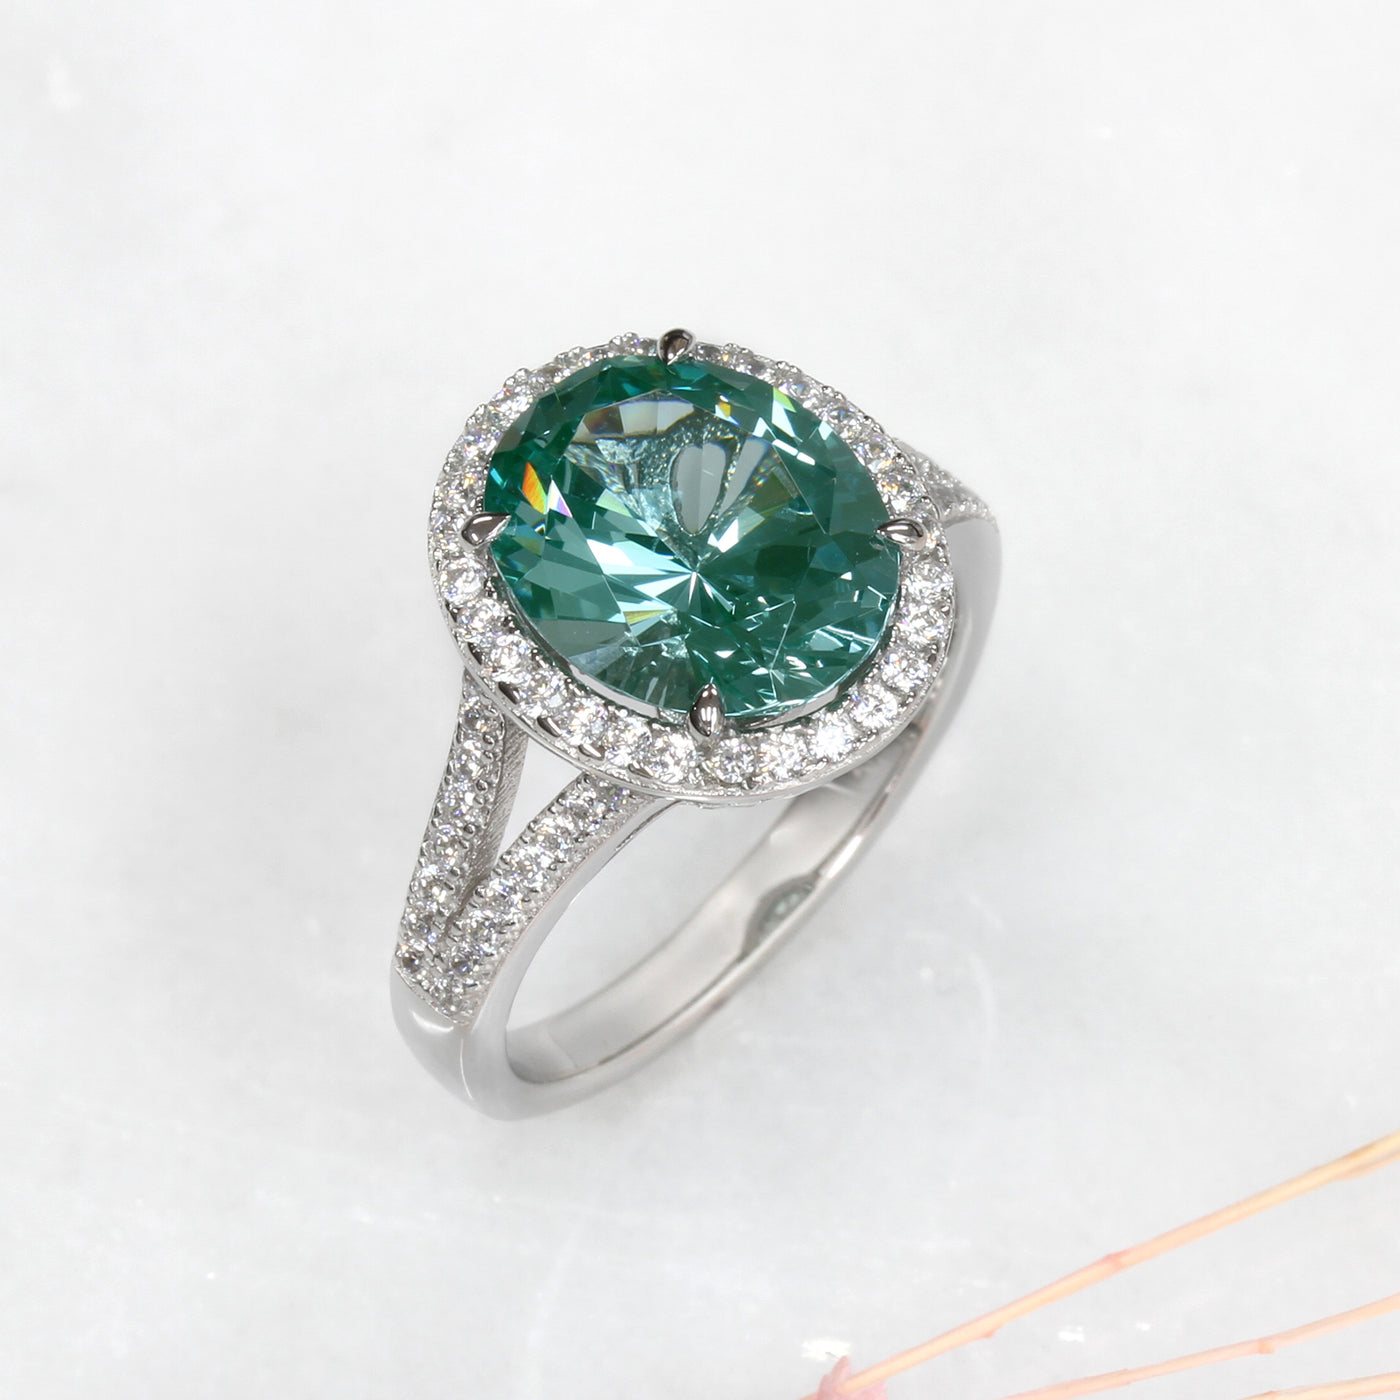 Aqua Elegance: Emerald Sea Majesty Ring